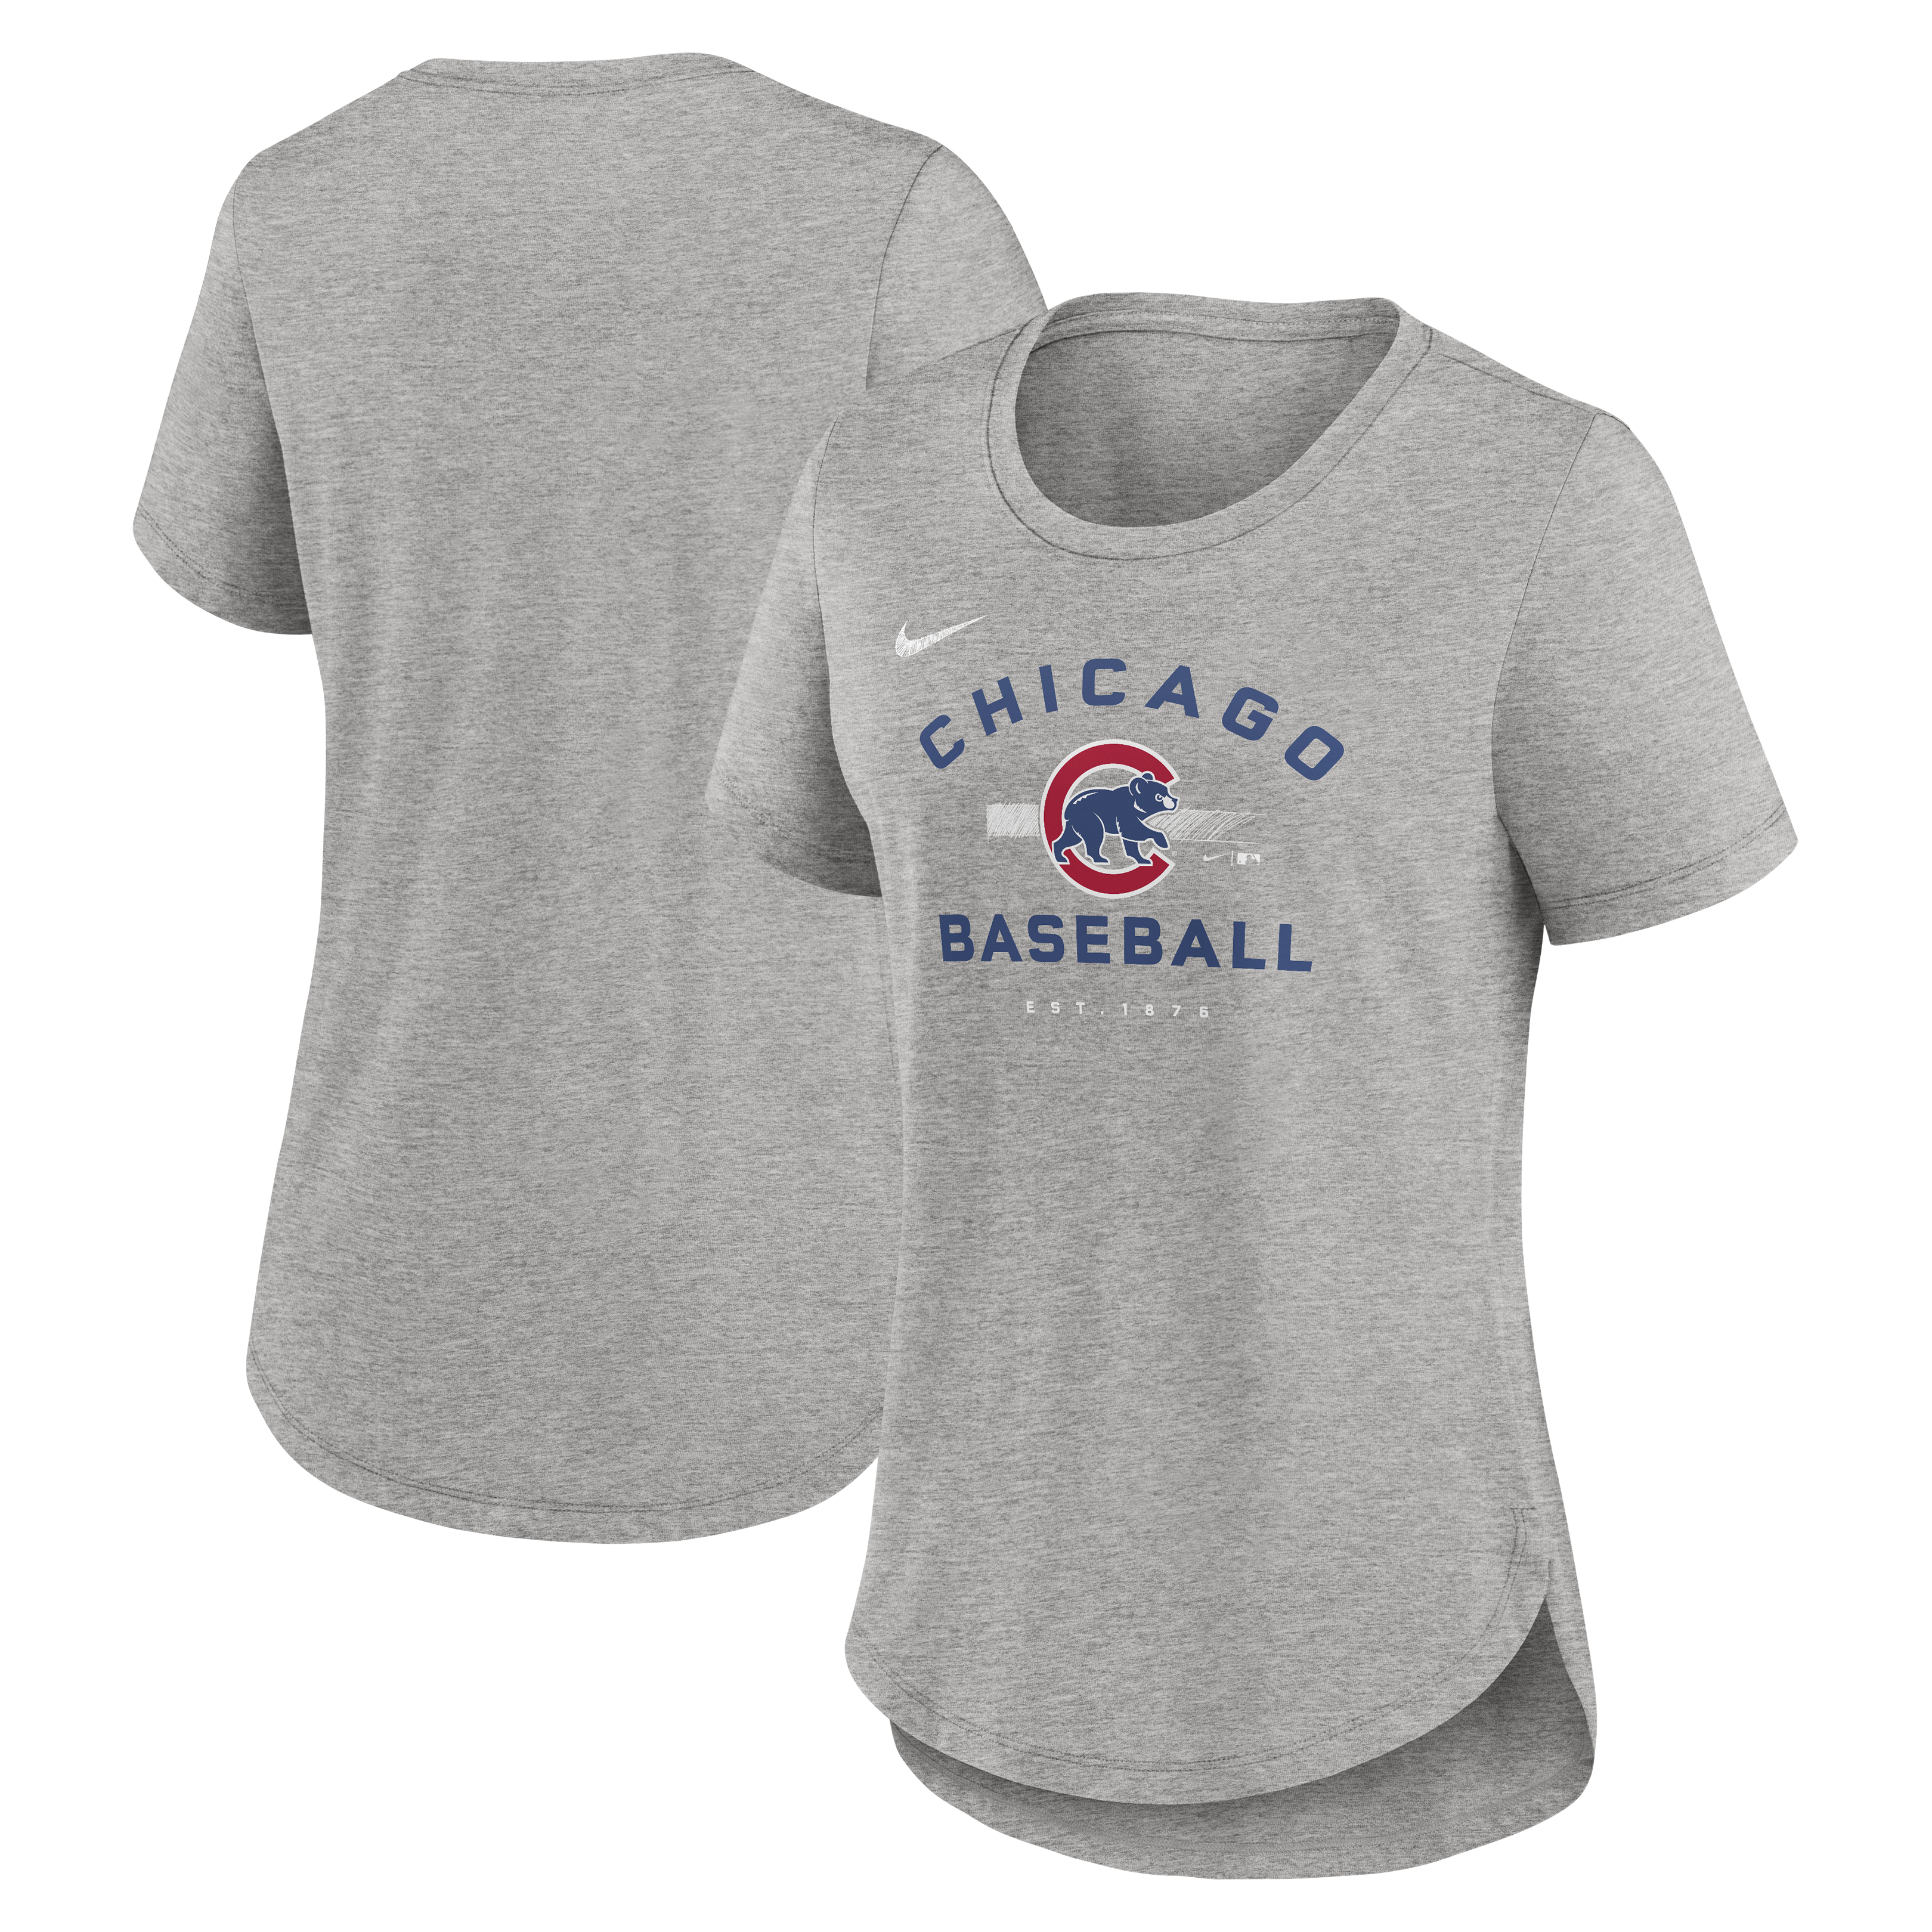 Women's Nike Royal Chicago Cubs Mesh V-Neck T-Shirt